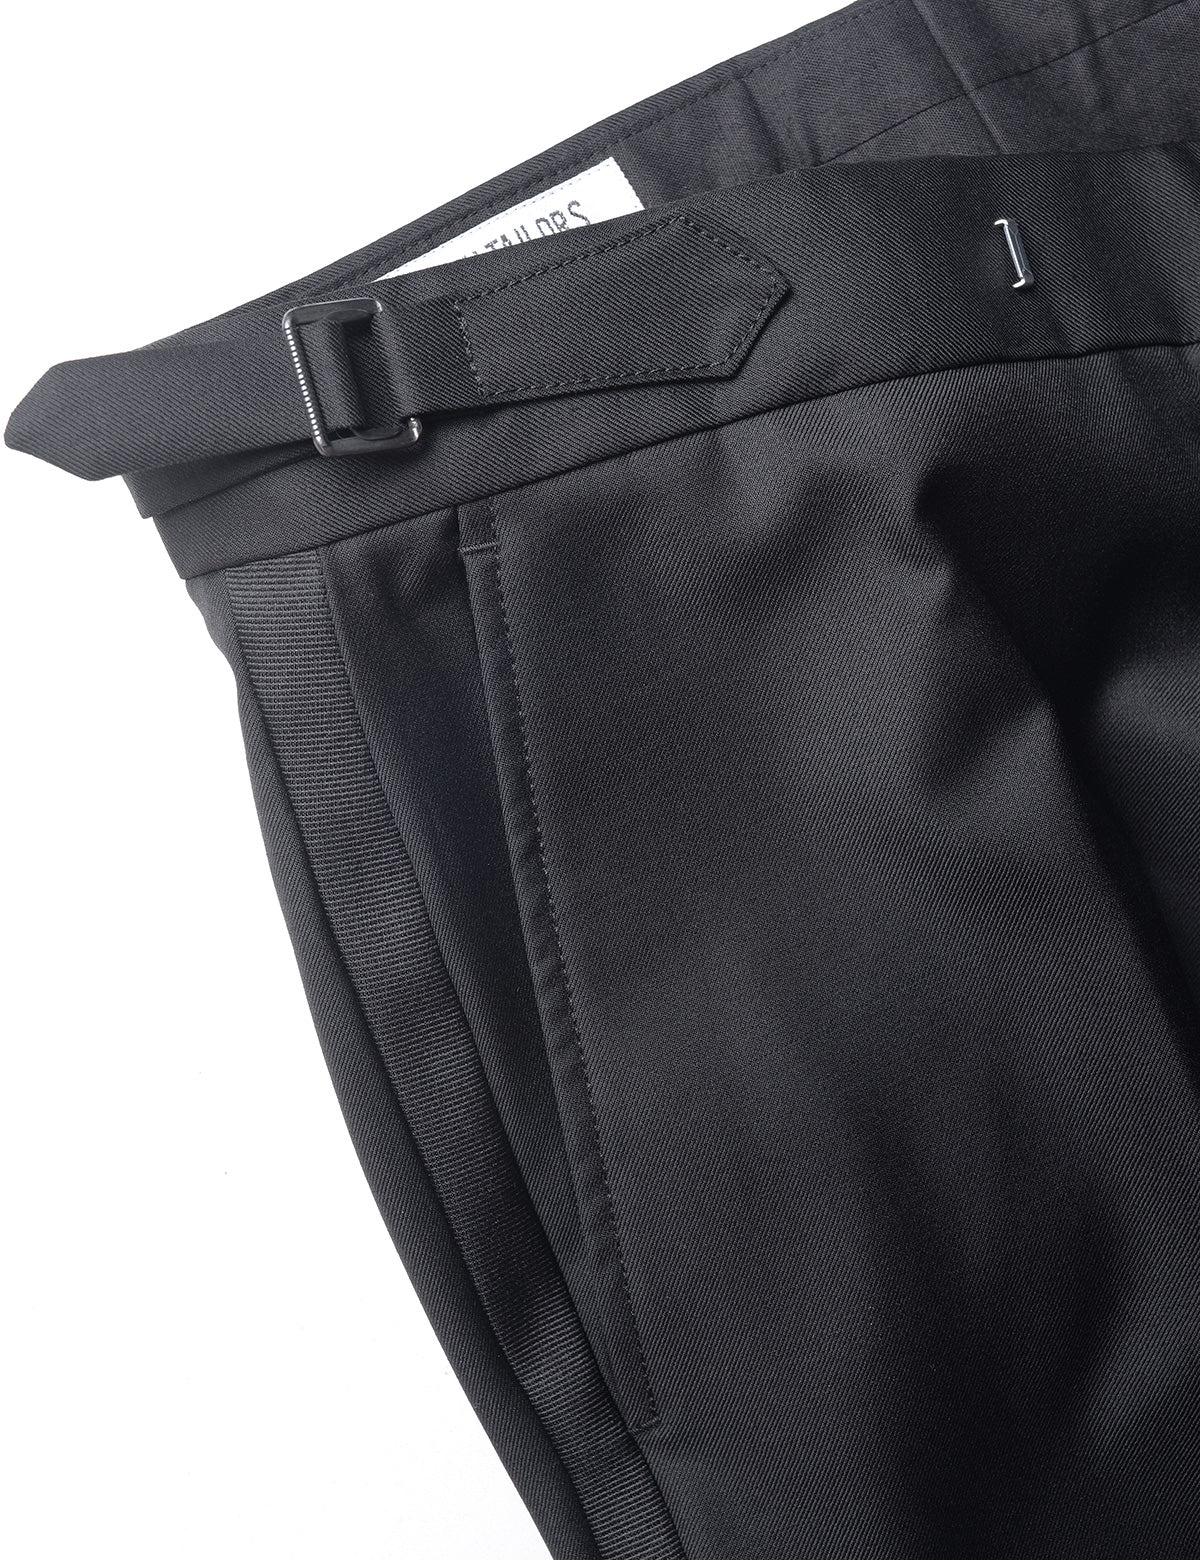 Detail shot of BKT50 Tuxedo Trouser in Super 120s Twill - Black with Grosgrain Stripe showing side adjuster and grosgrain stripe